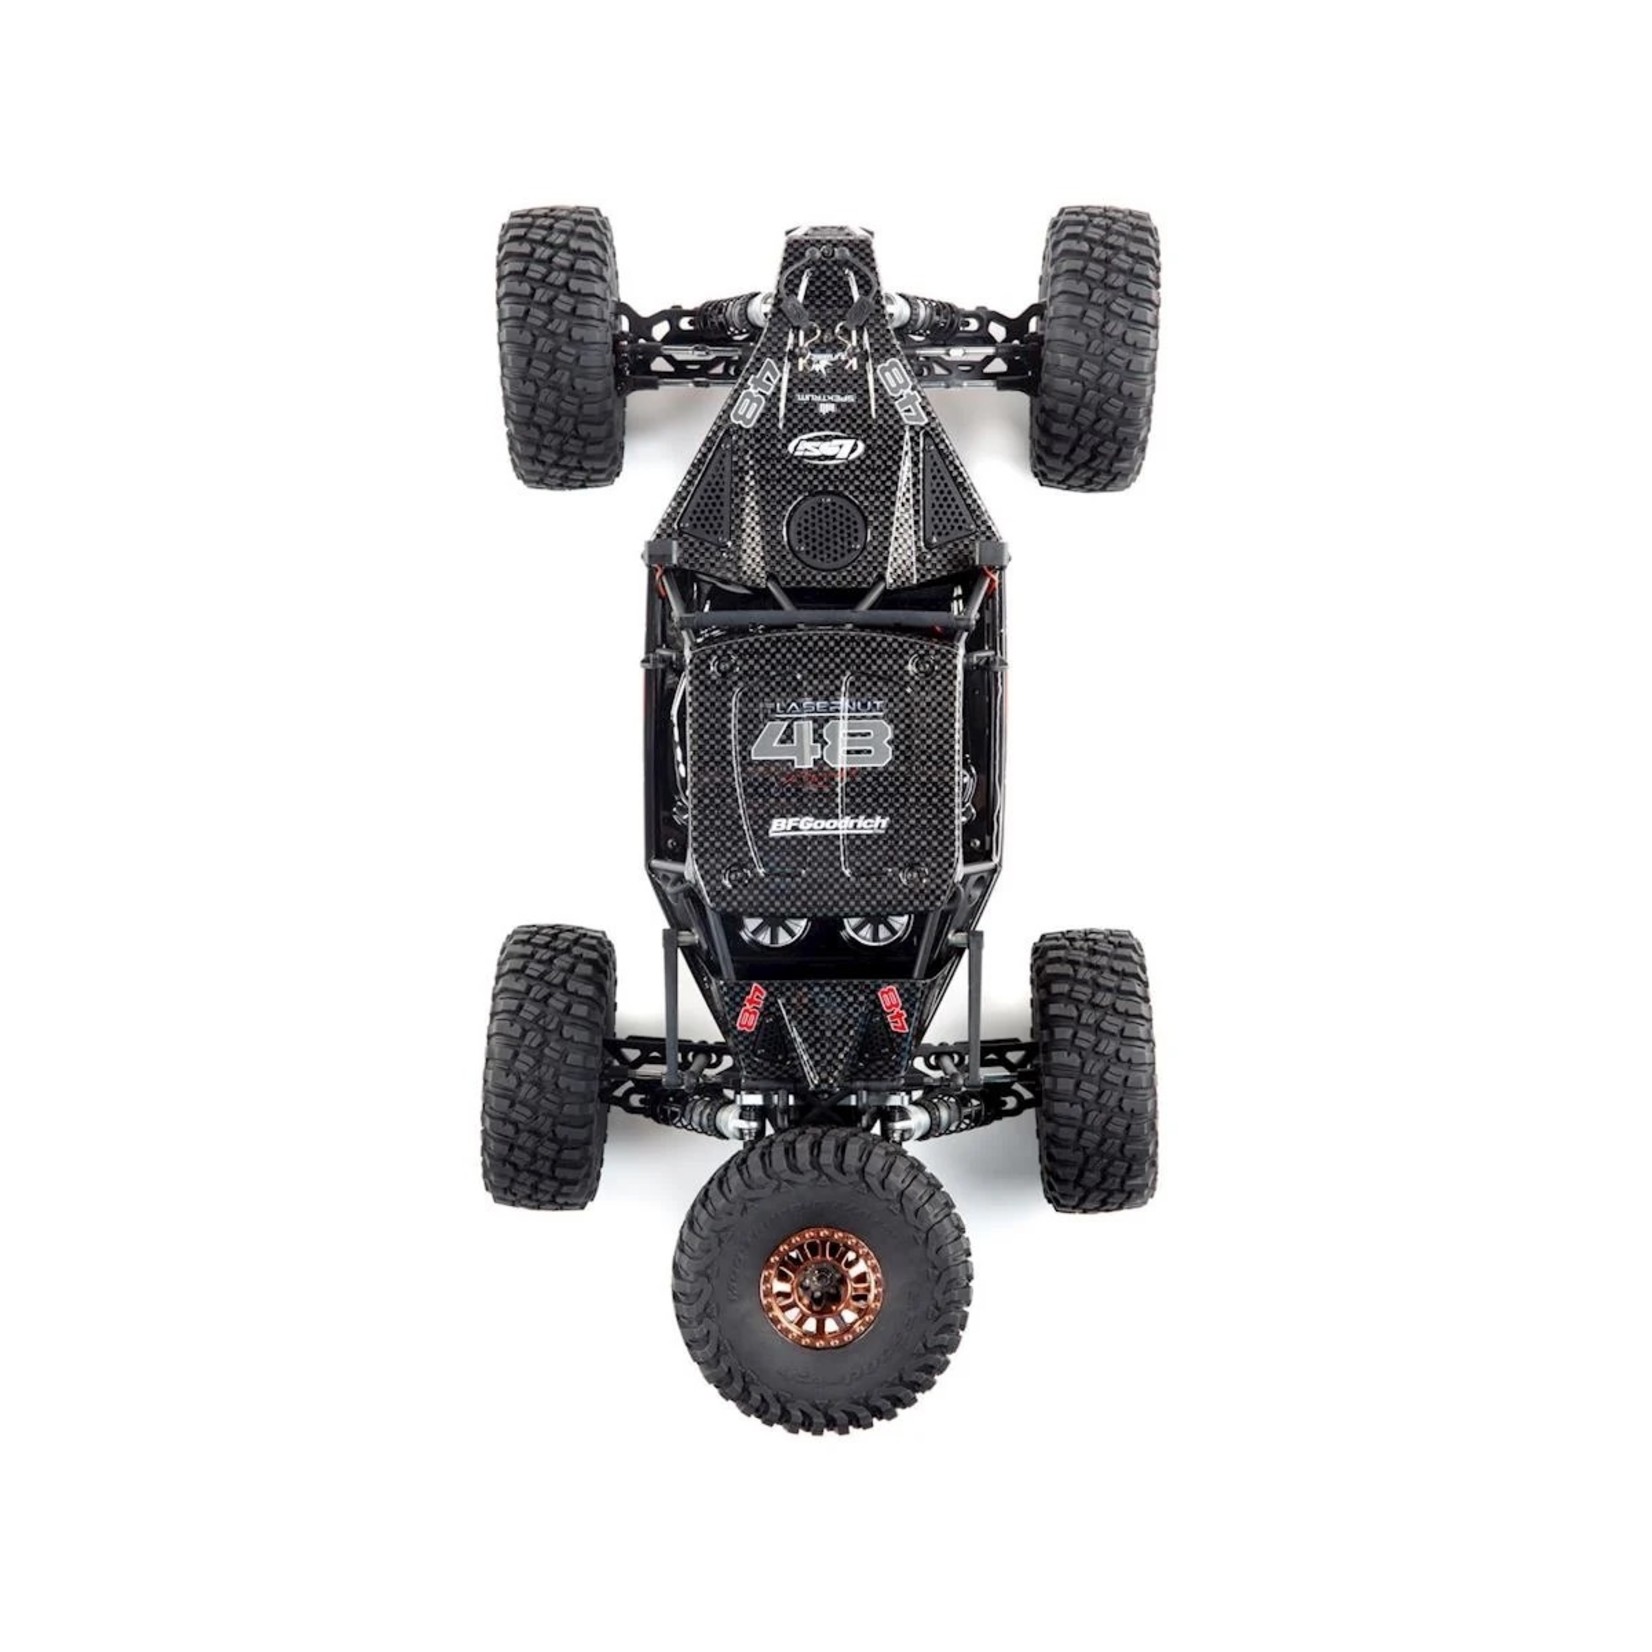 Losi Losi Lasernut U4 1/10 4WD Brushless RTR Rock Racer (Black) w/2.4GHz Radio & Smart ESC #LOS03028T2